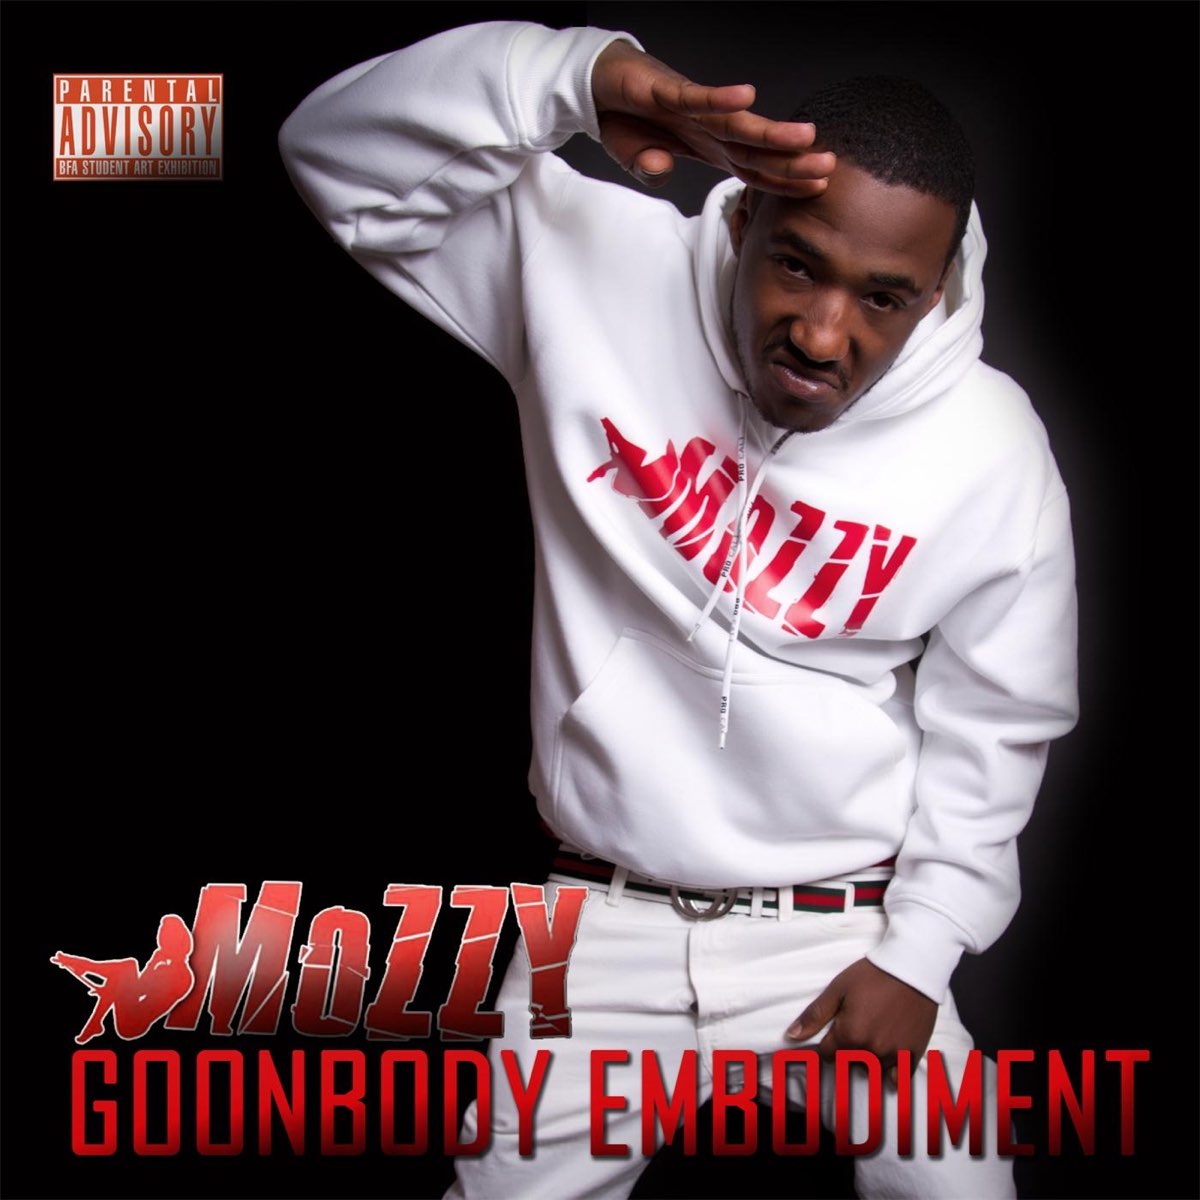 Mozzy - Goonbody Embodiment